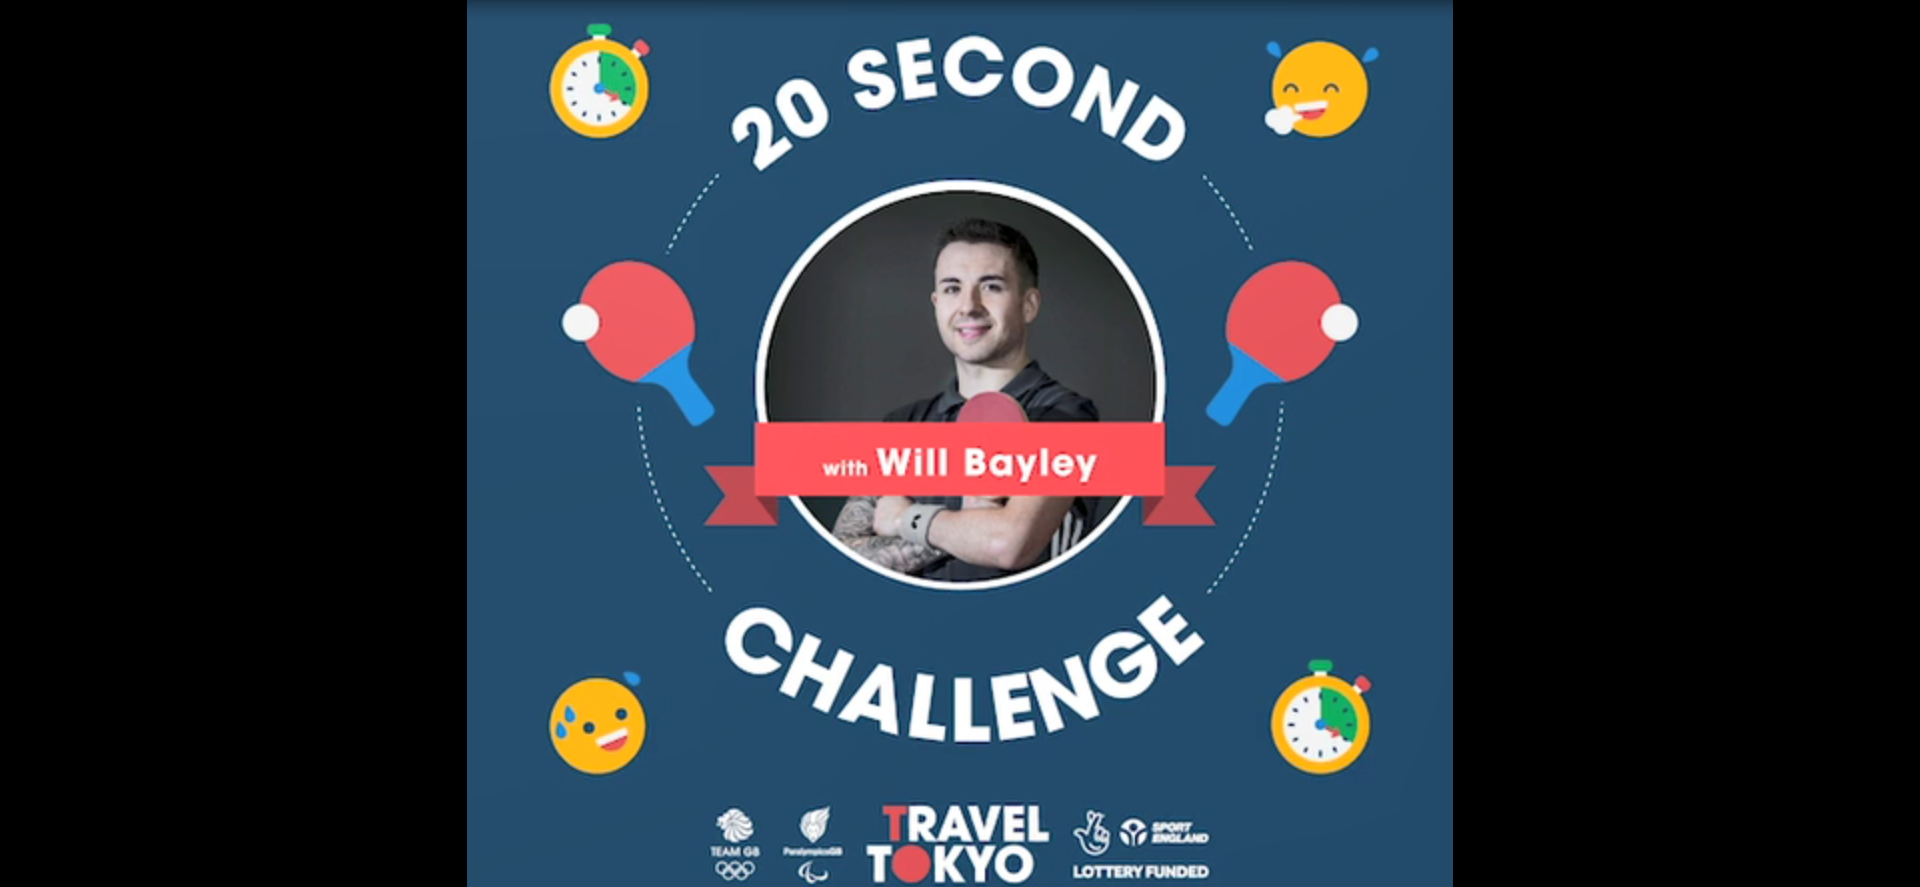 Will Bayley's challenge